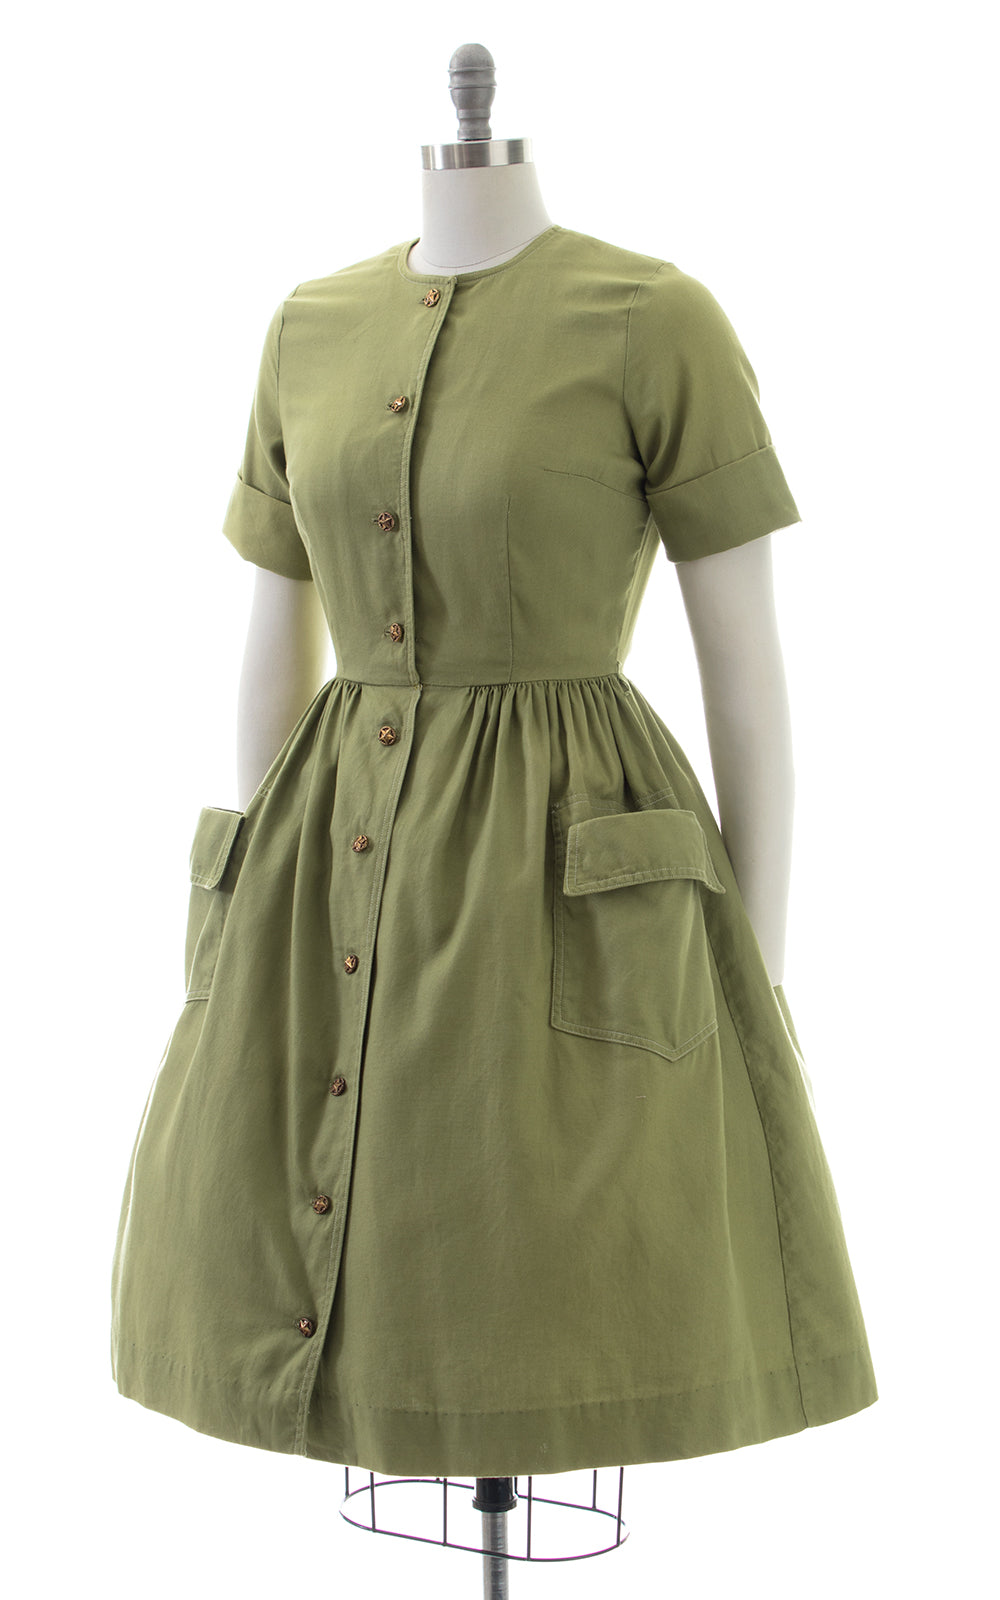 1950s Olive Green Shirtwaist Dress with Pockets